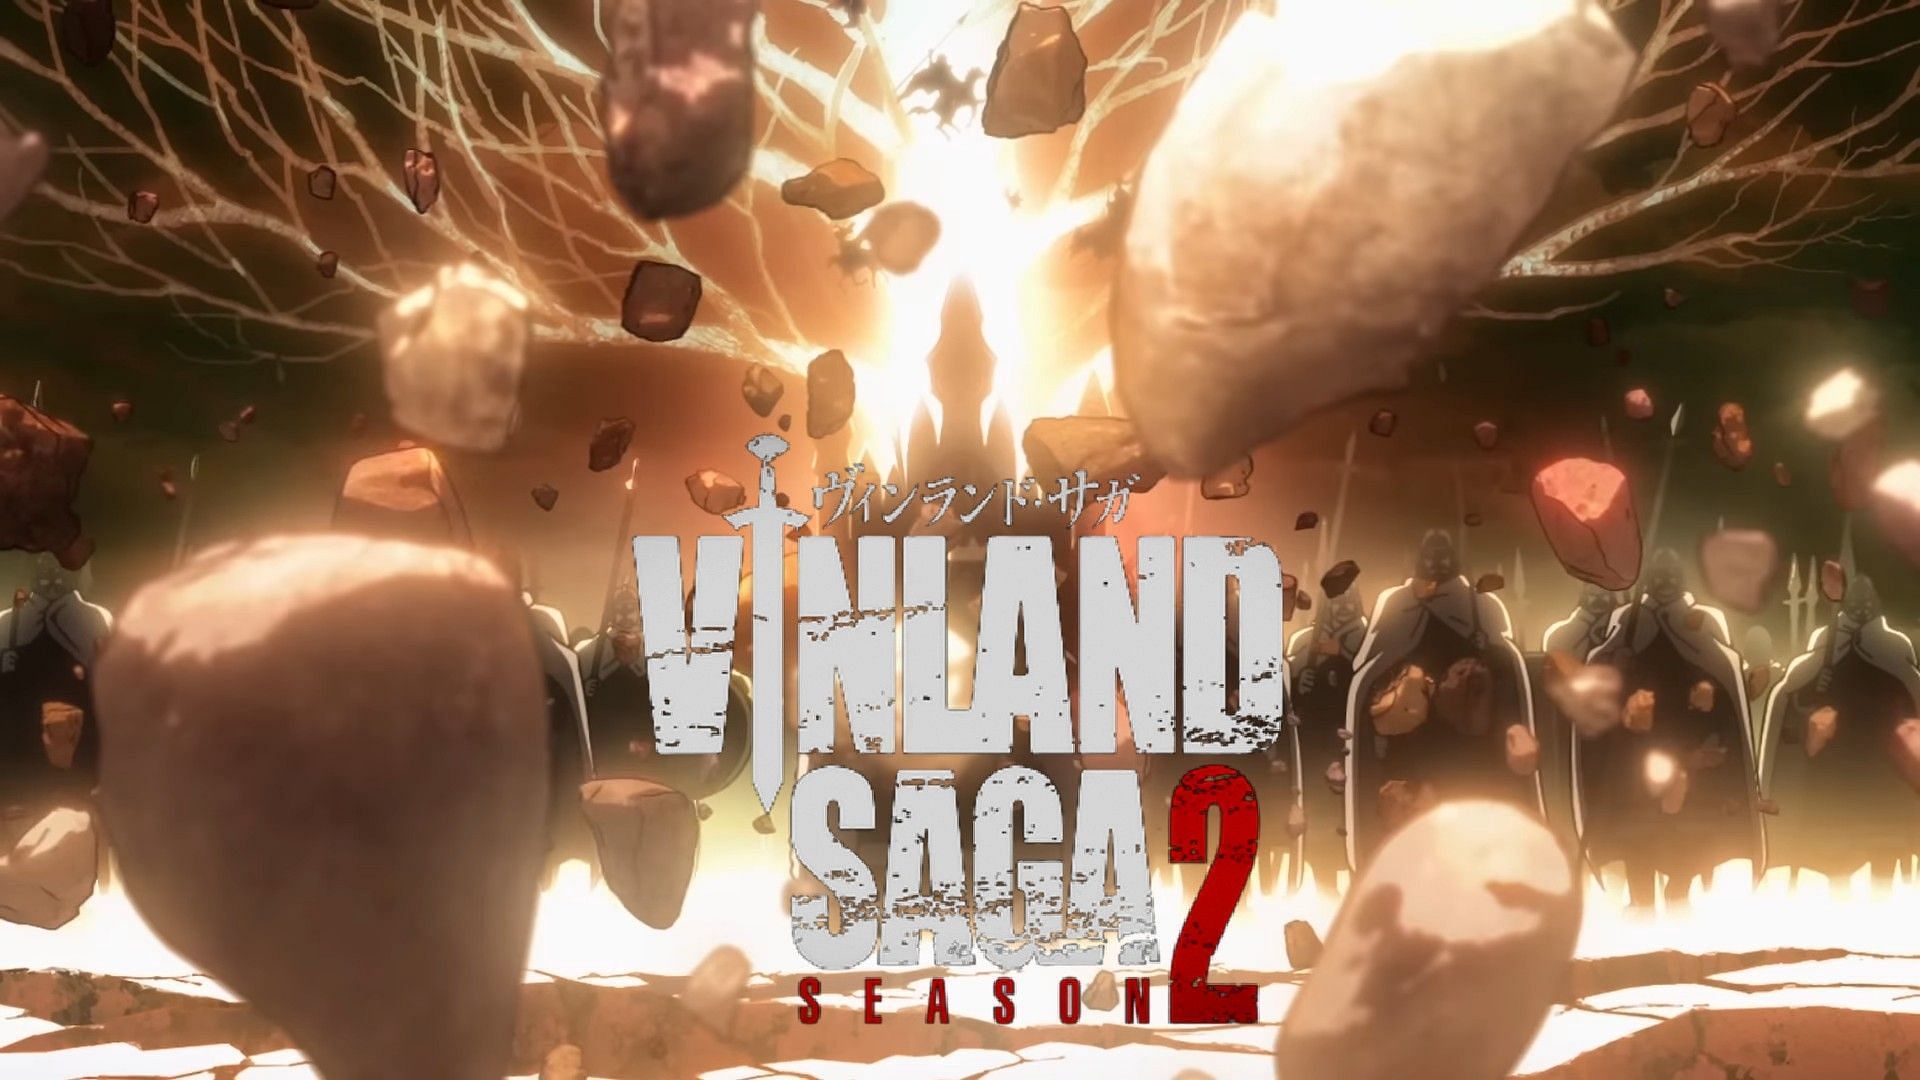 Vinland Saga Season 2 Confirmed With An Adventure-Filled Trailer